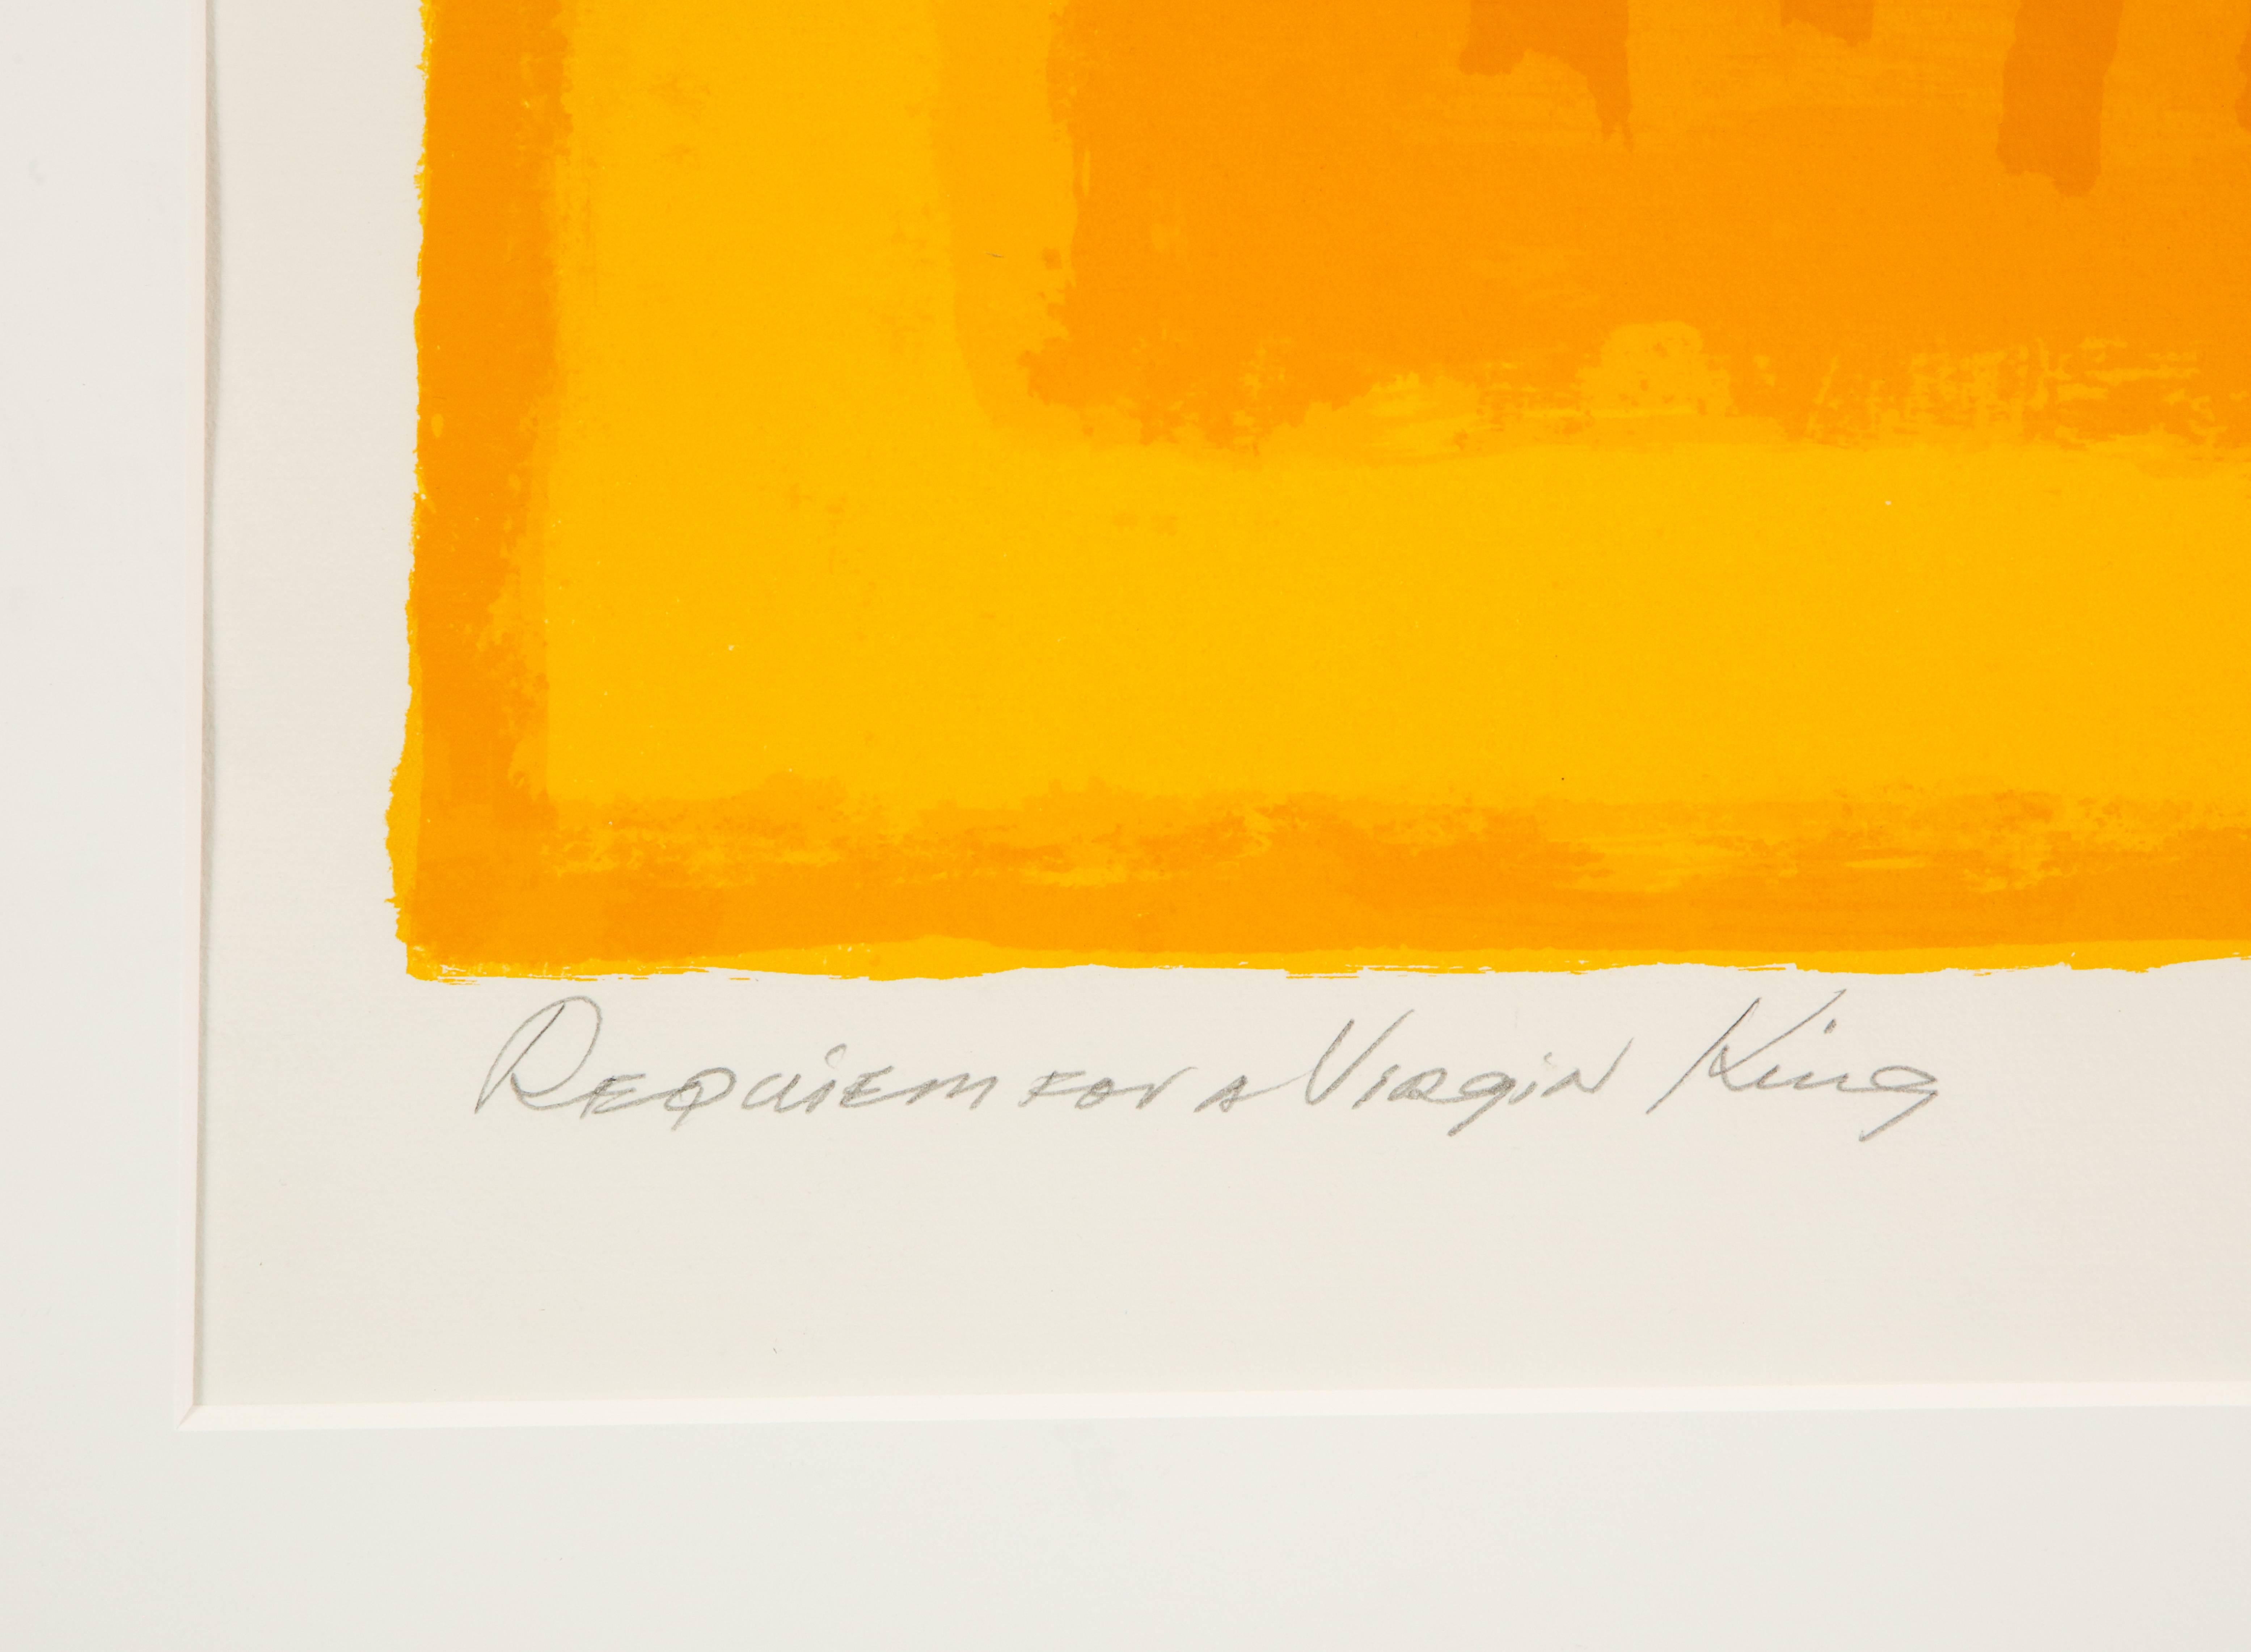 Mid-Century Modern Lithographie abstraite jaune Adja Yunkers « Requiem for a Virgin King », signée en vente